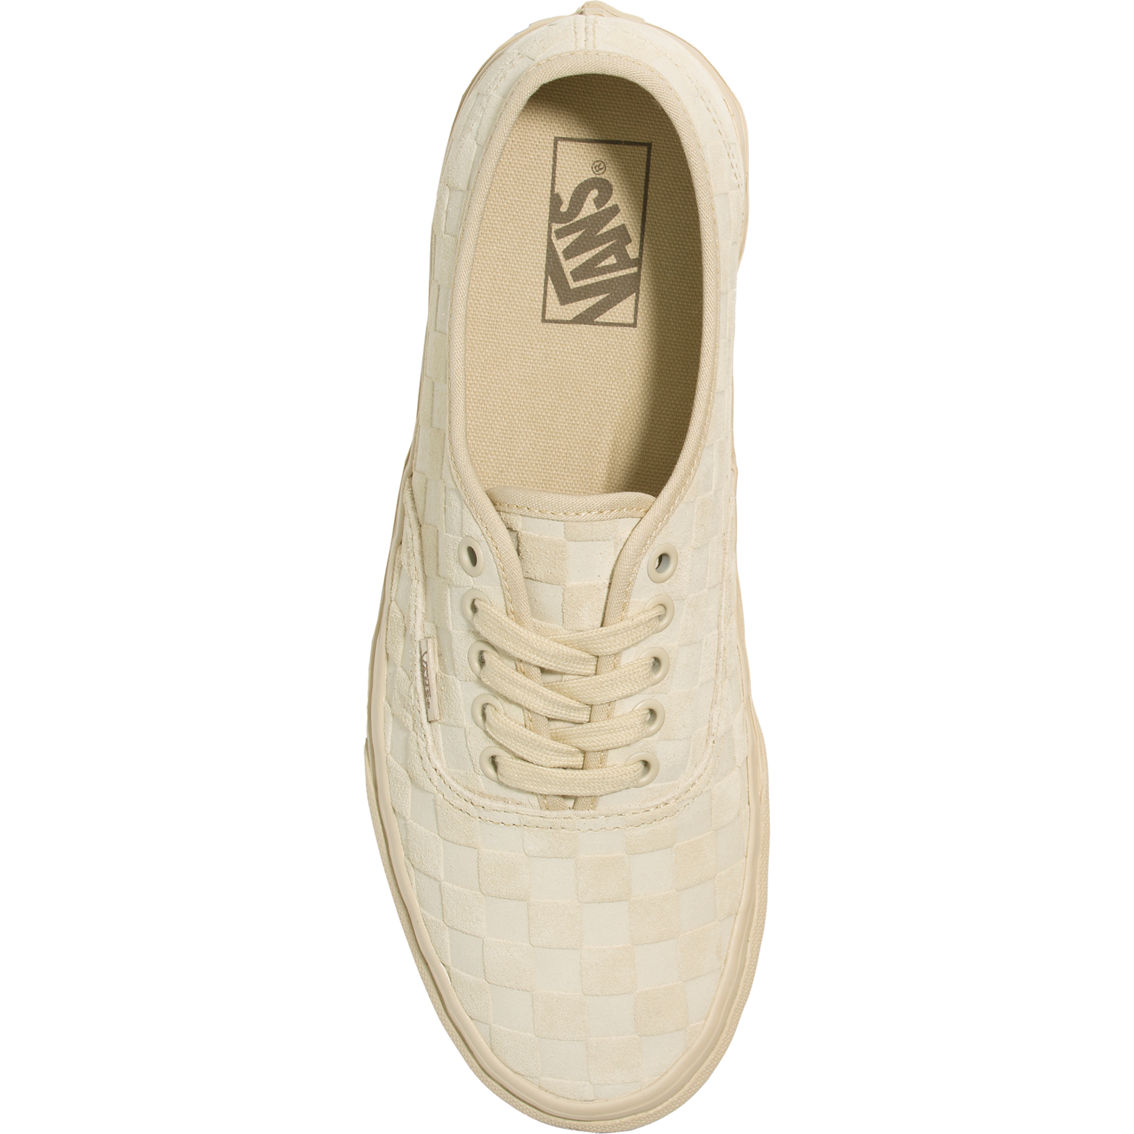 Vans Men's Authentic Mono Sneakers Checkerboard Tan - Image 3 of 4